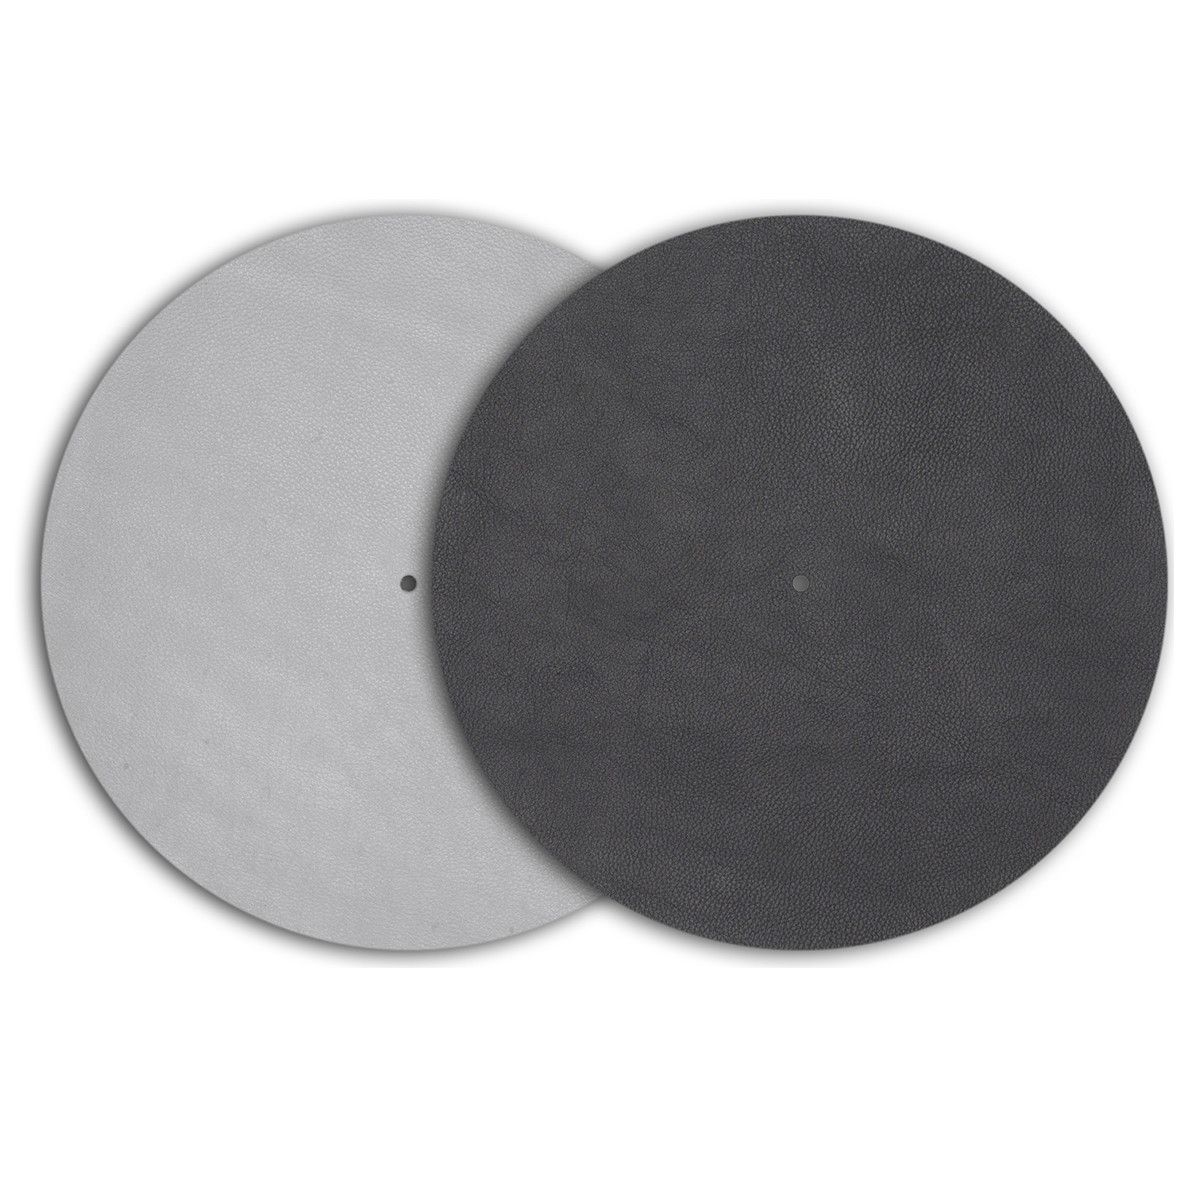 Pro-Ject Leather It Turntable Platter Mat - Black